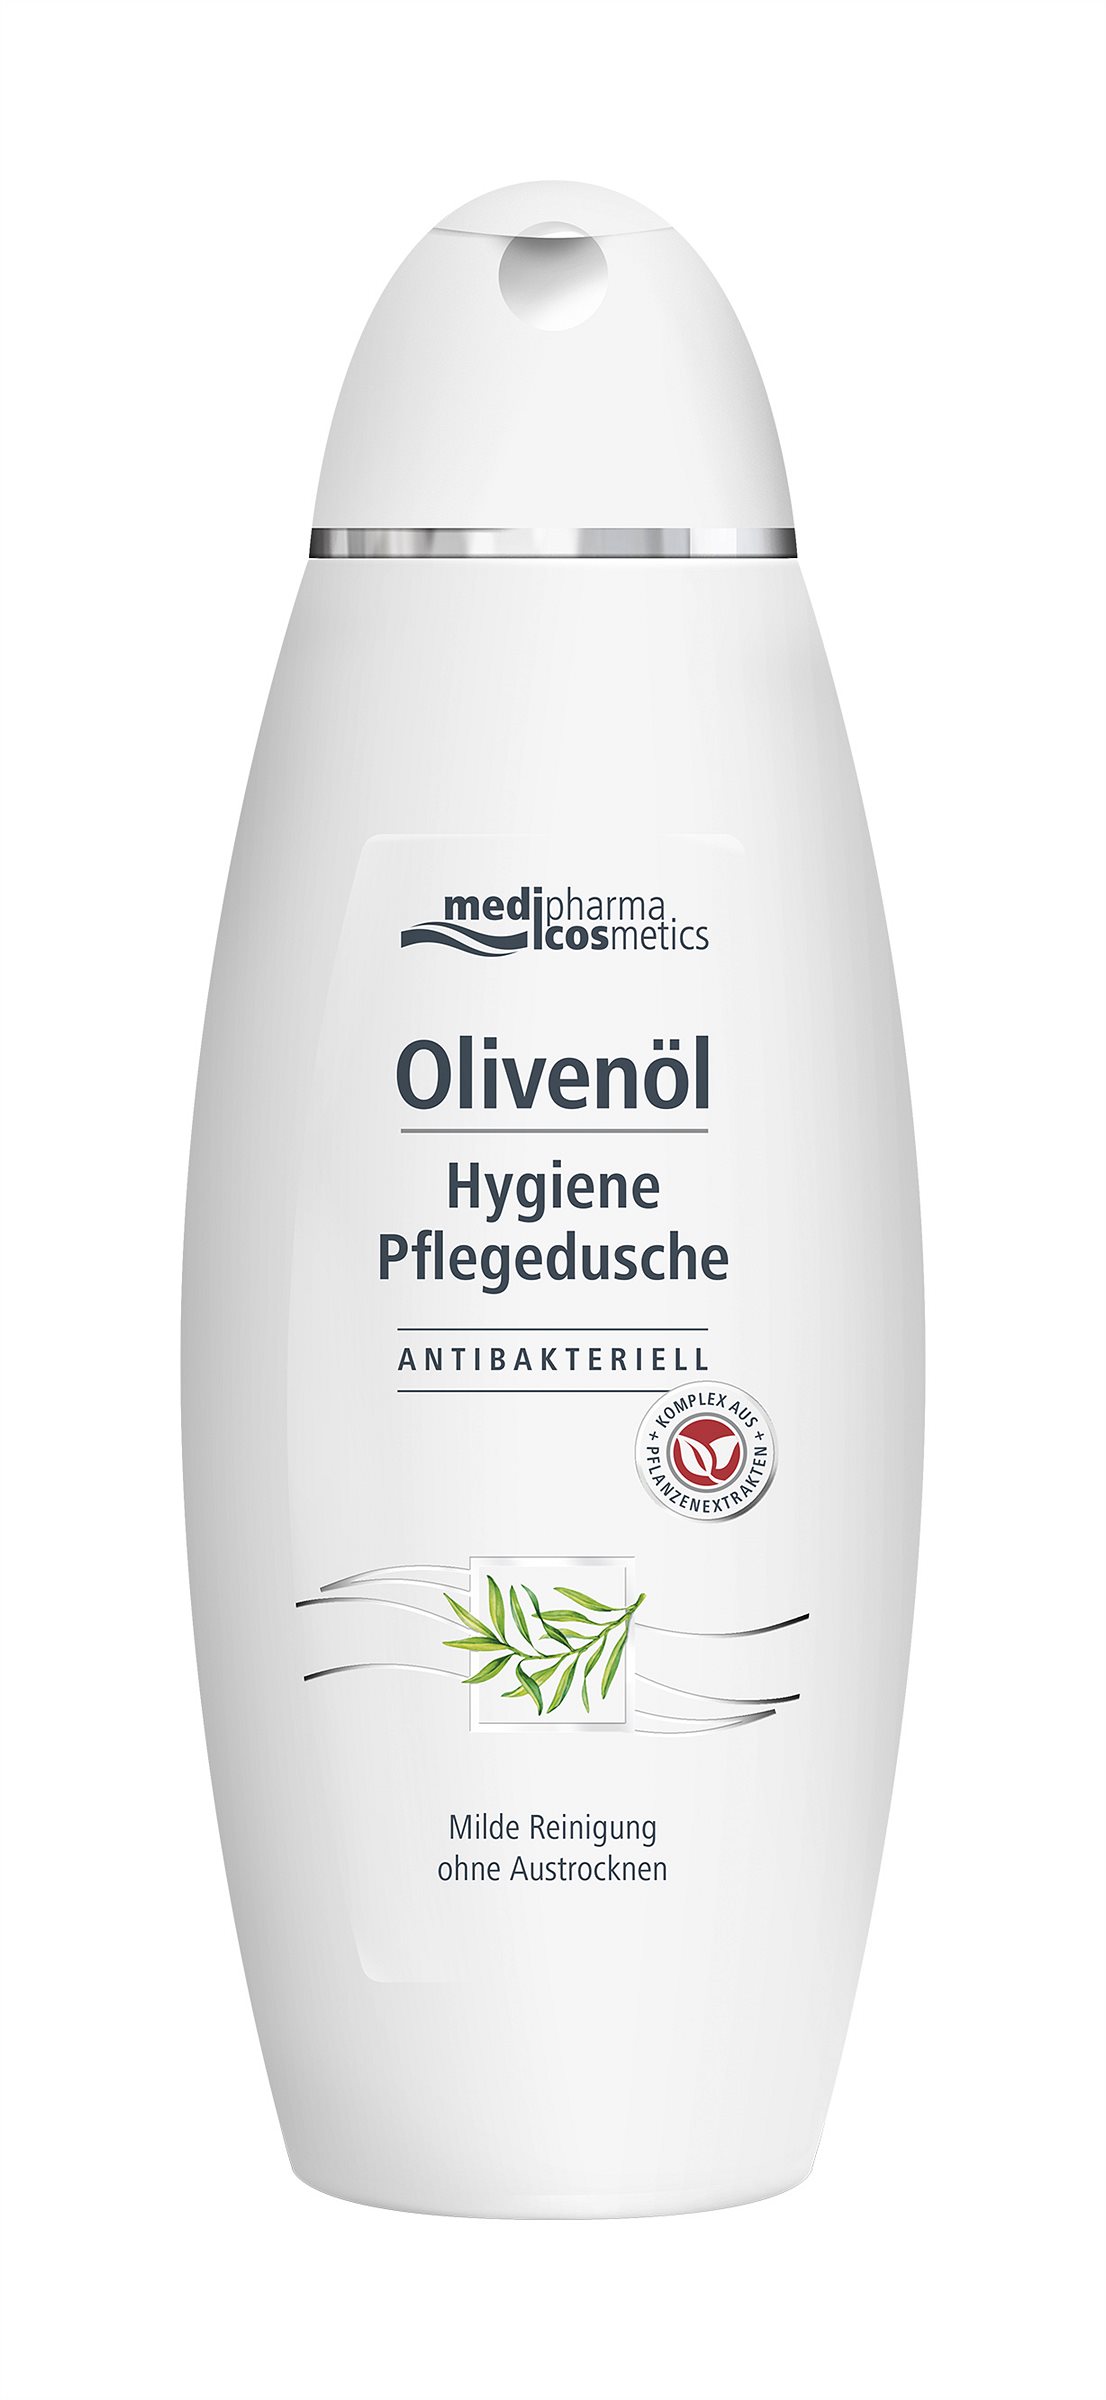 medipharma-cosmetics-Olivenoel-Hygiene-Pflegedusche-ANTIBAKTERIELL